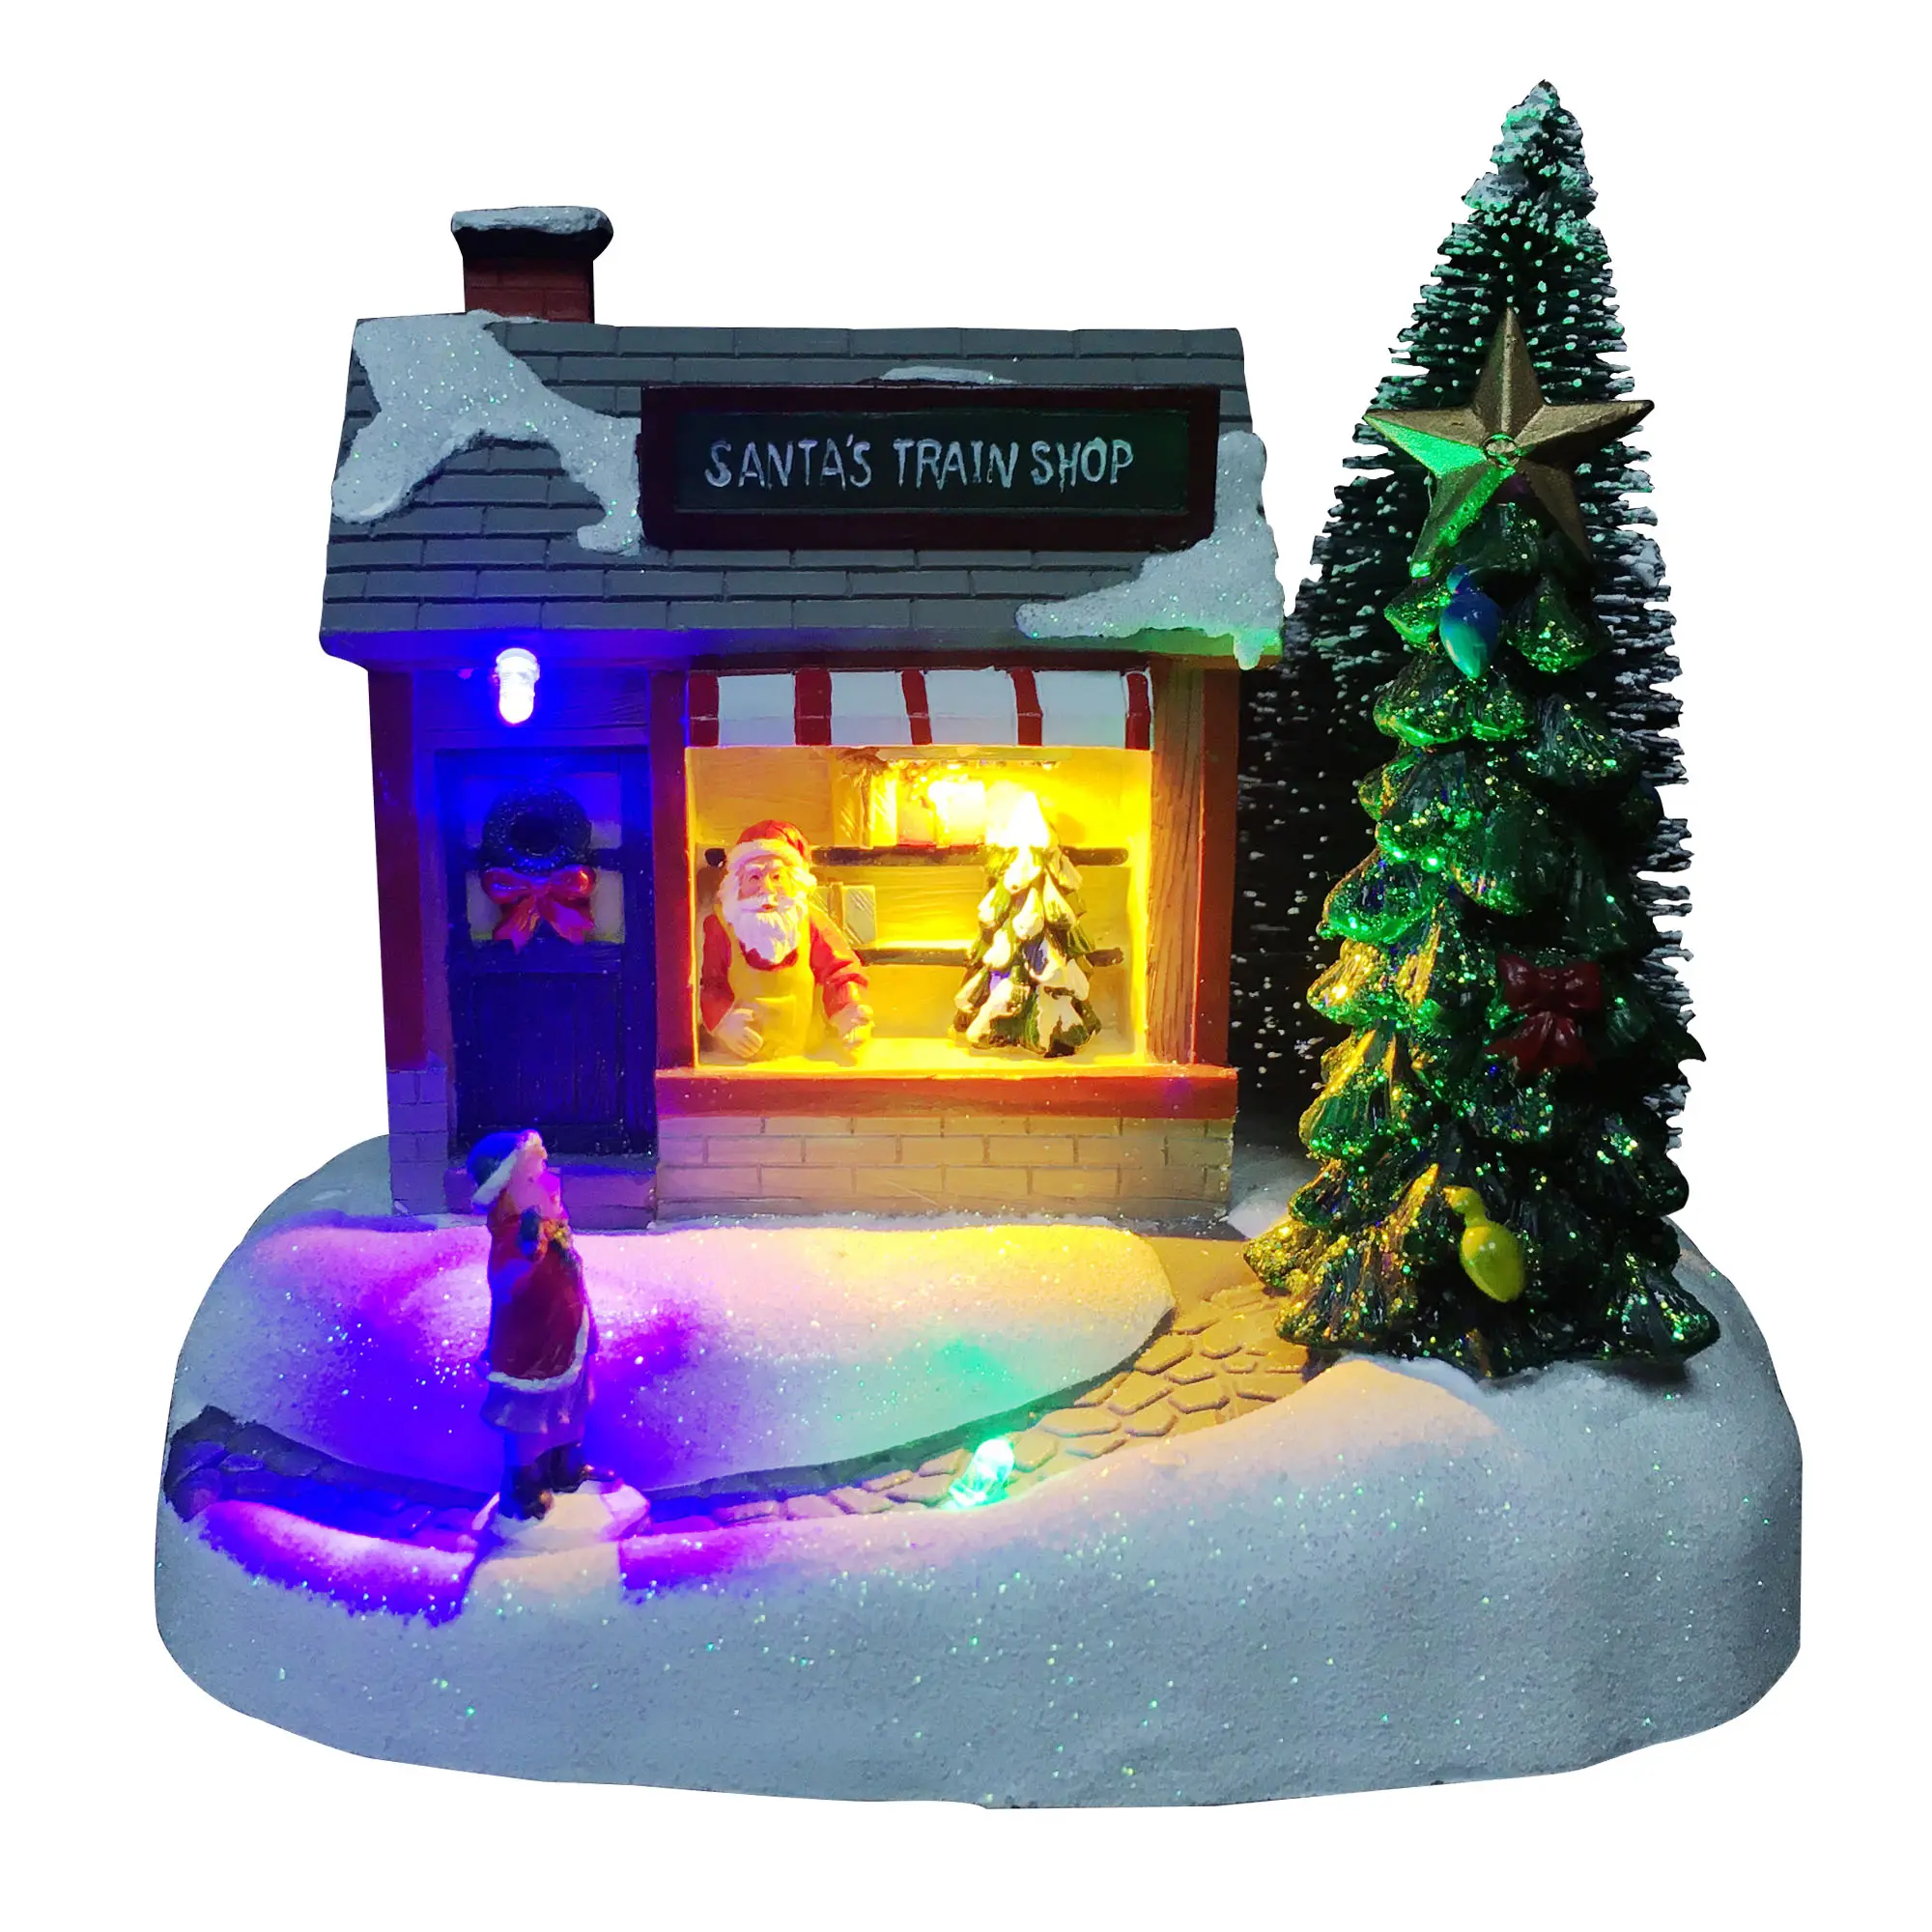 Melody Colorful Xmas Village Christmas Decoration Santa's Train Shop Scene Led Lighted Christmas House